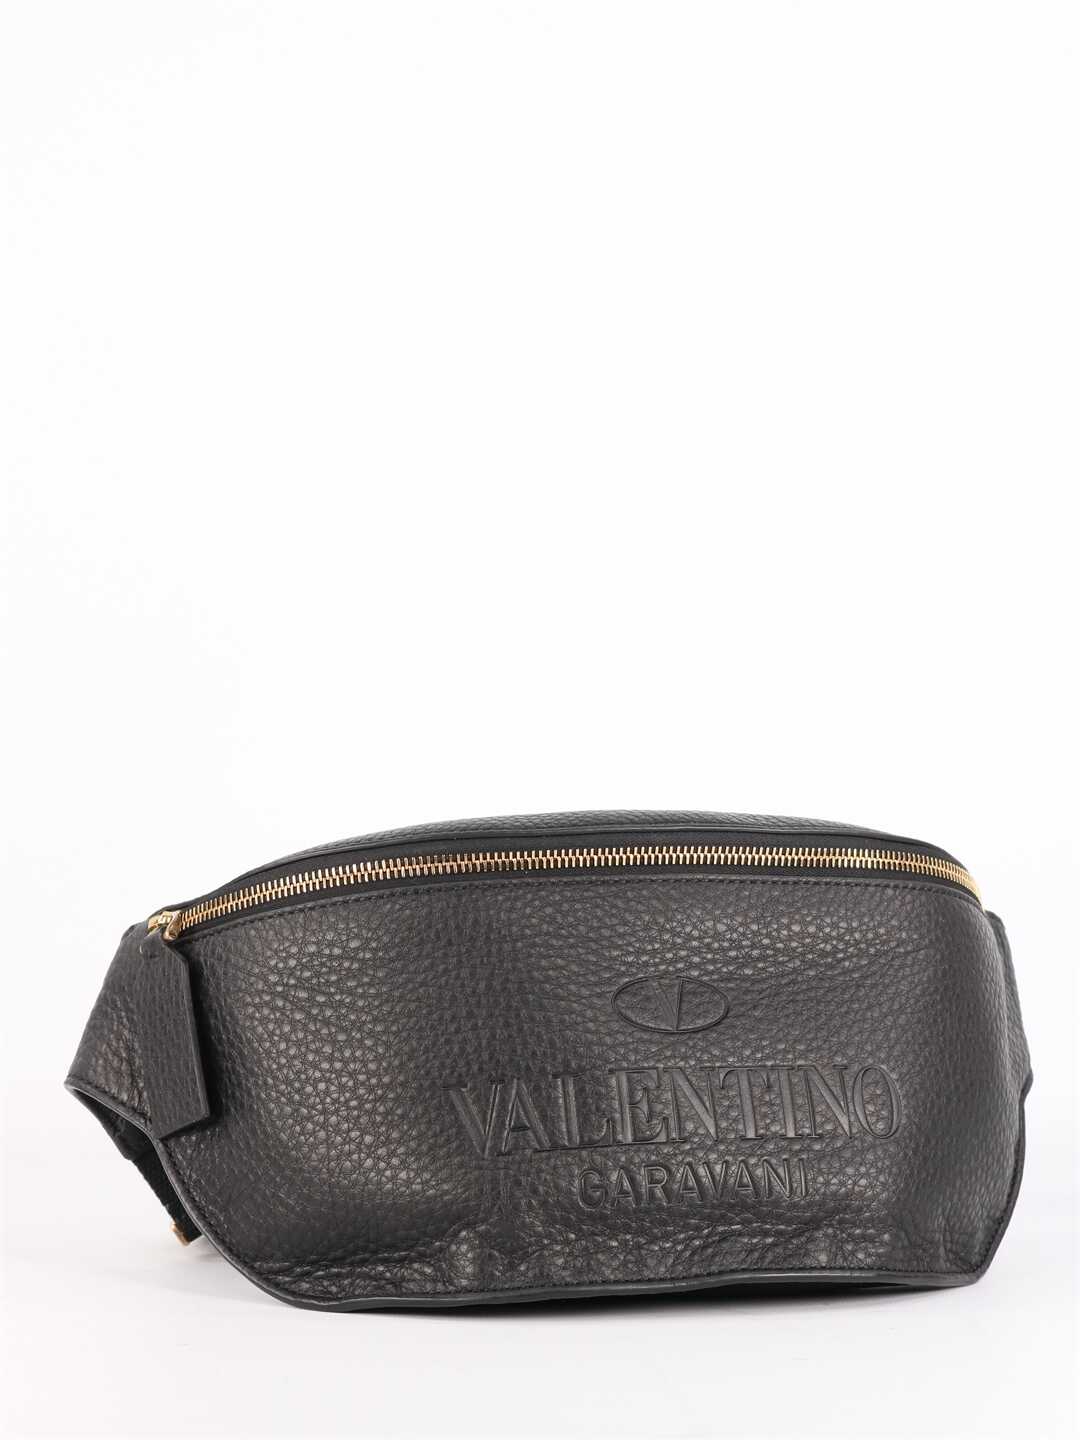 Valentino Garavani Belt Bag Valentino Garavani Identity WY2B0B10 QPT Black